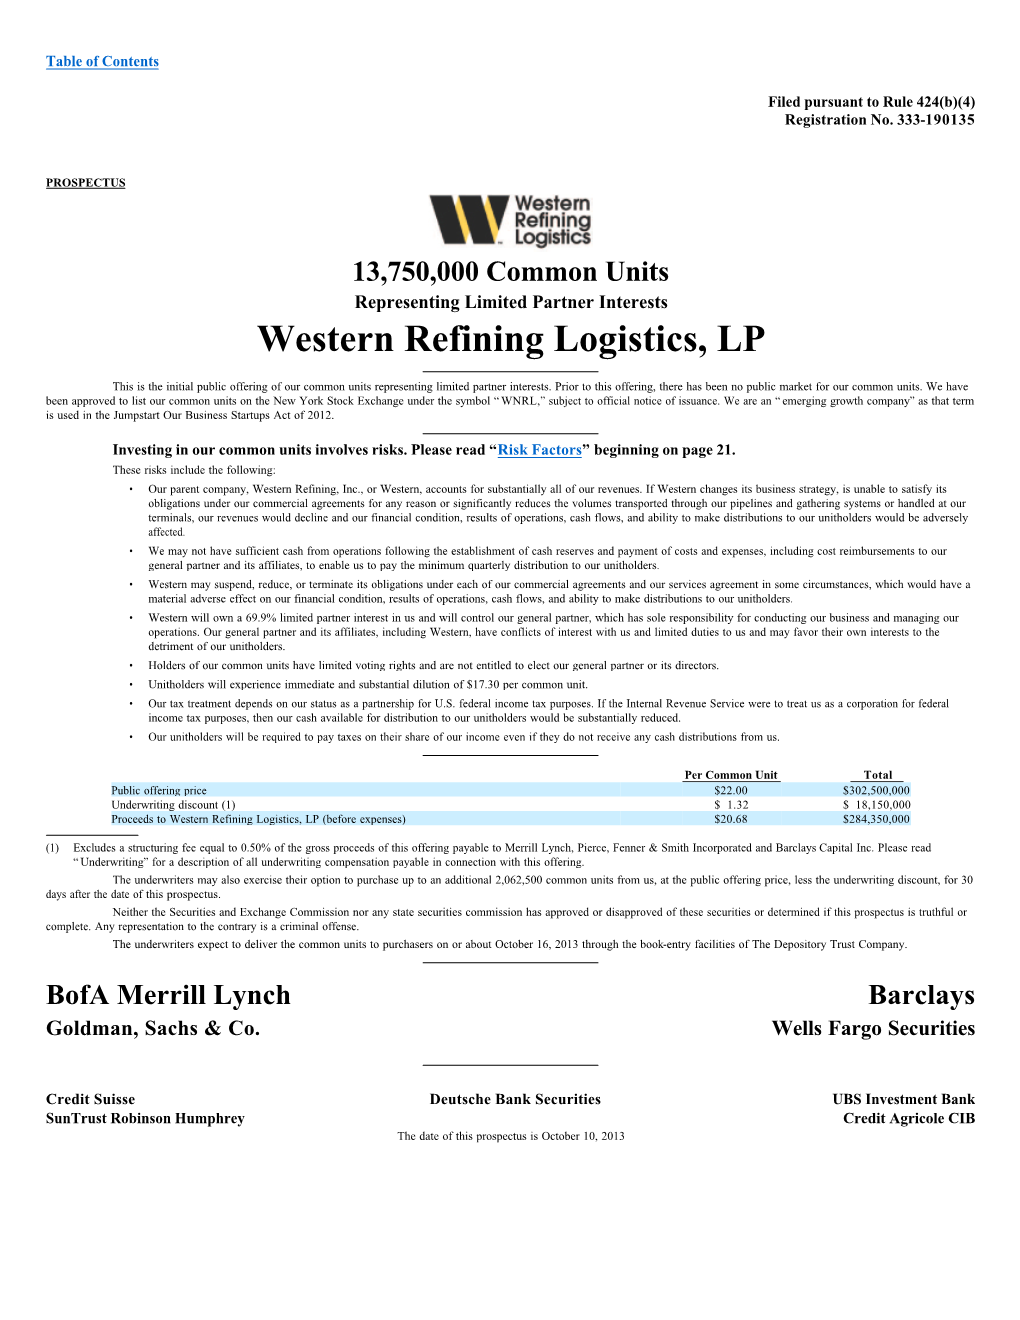 Western Refining Logistics, LP